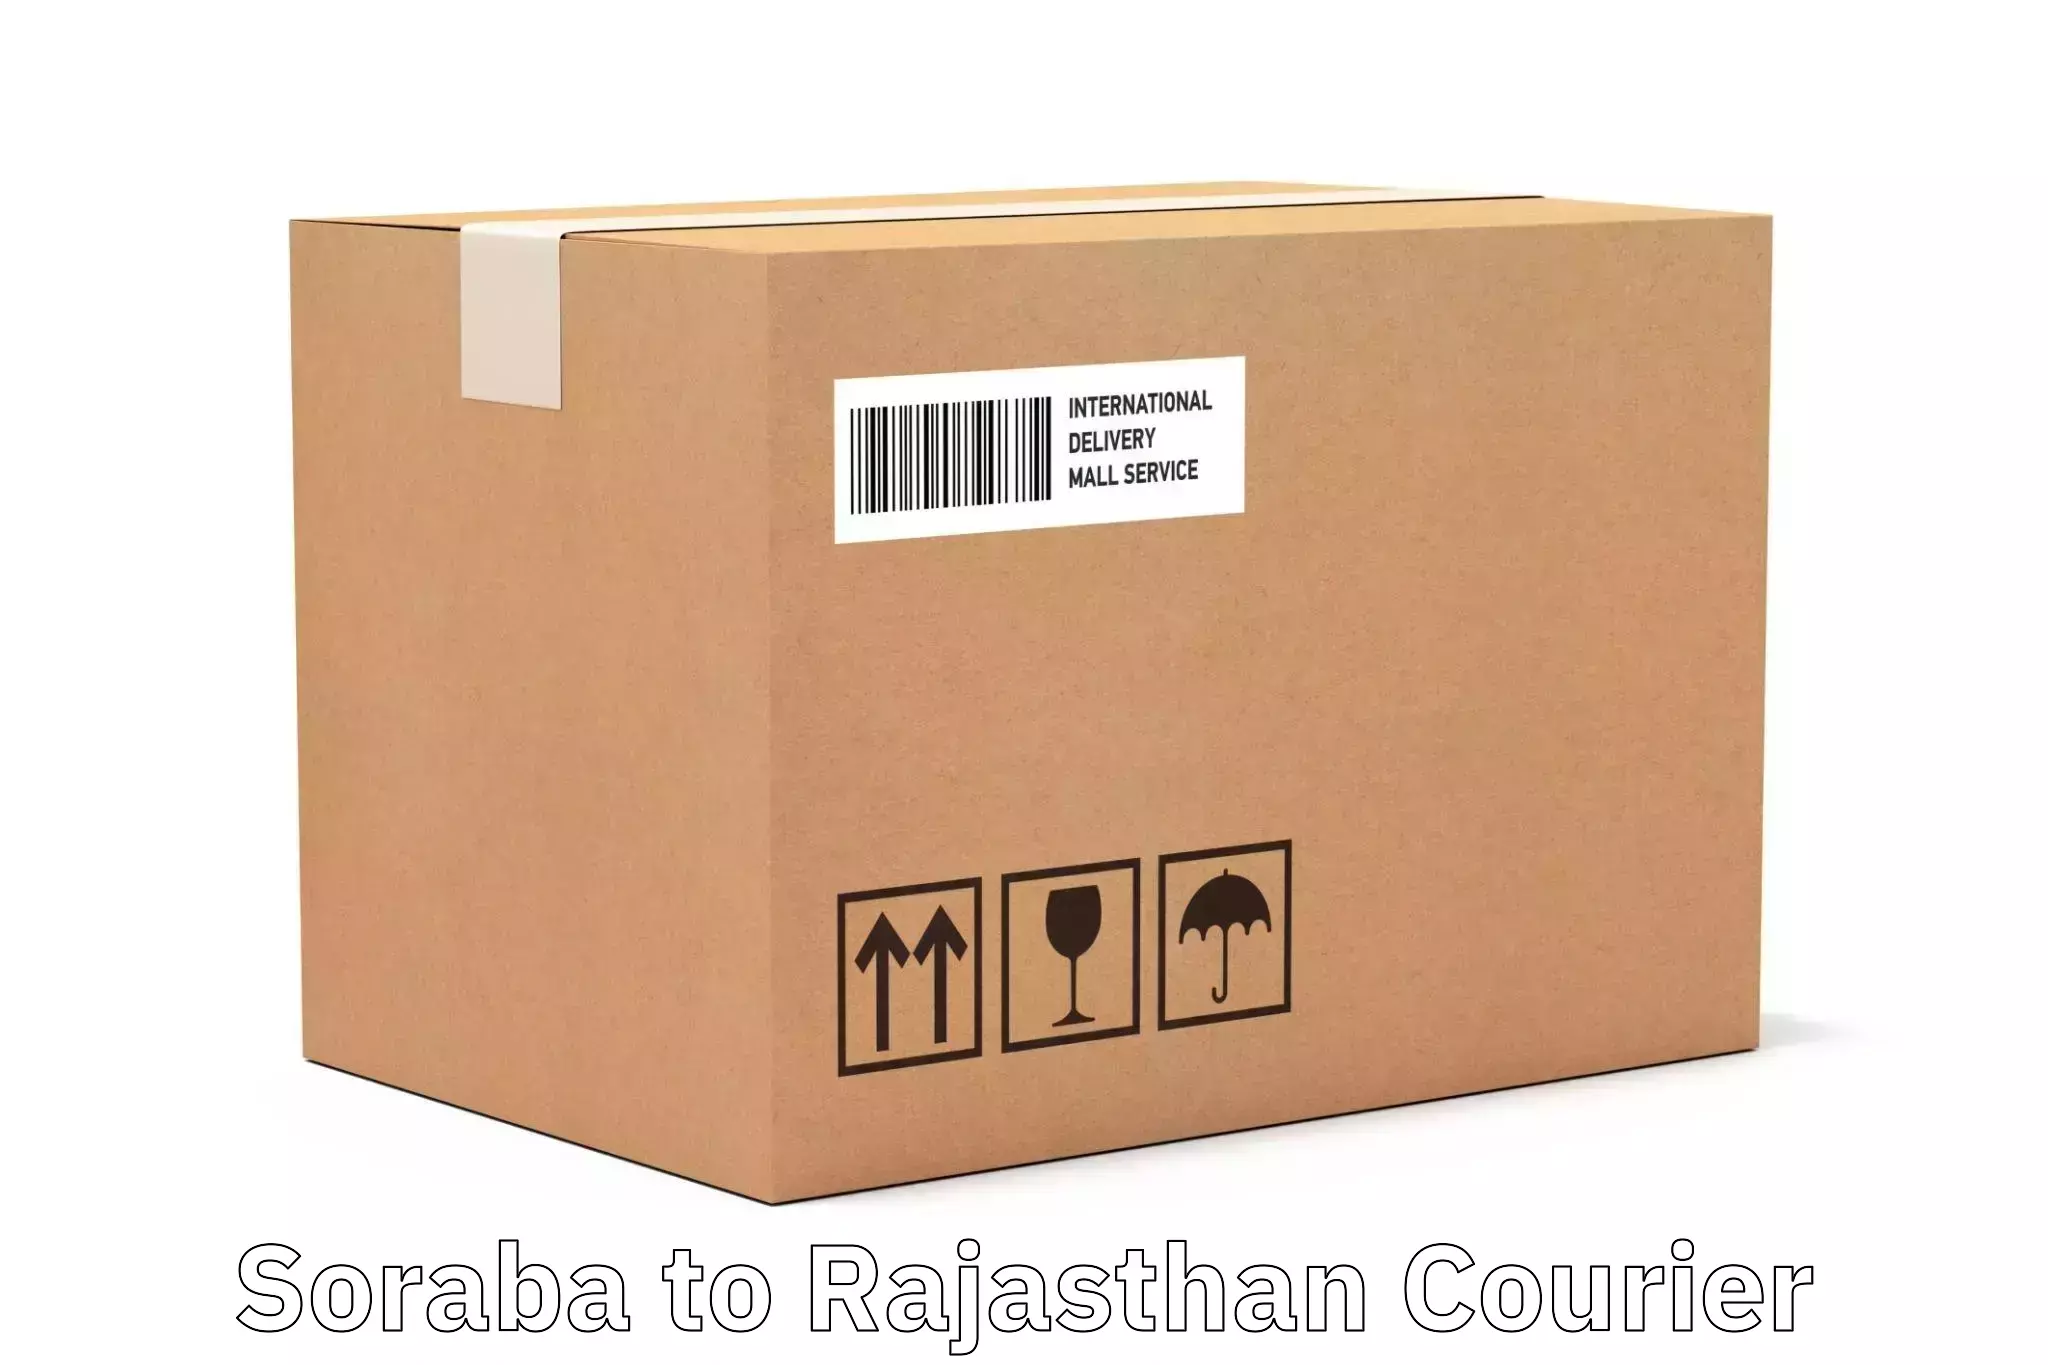 Optimized delivery routes Soraba to Ras Pali